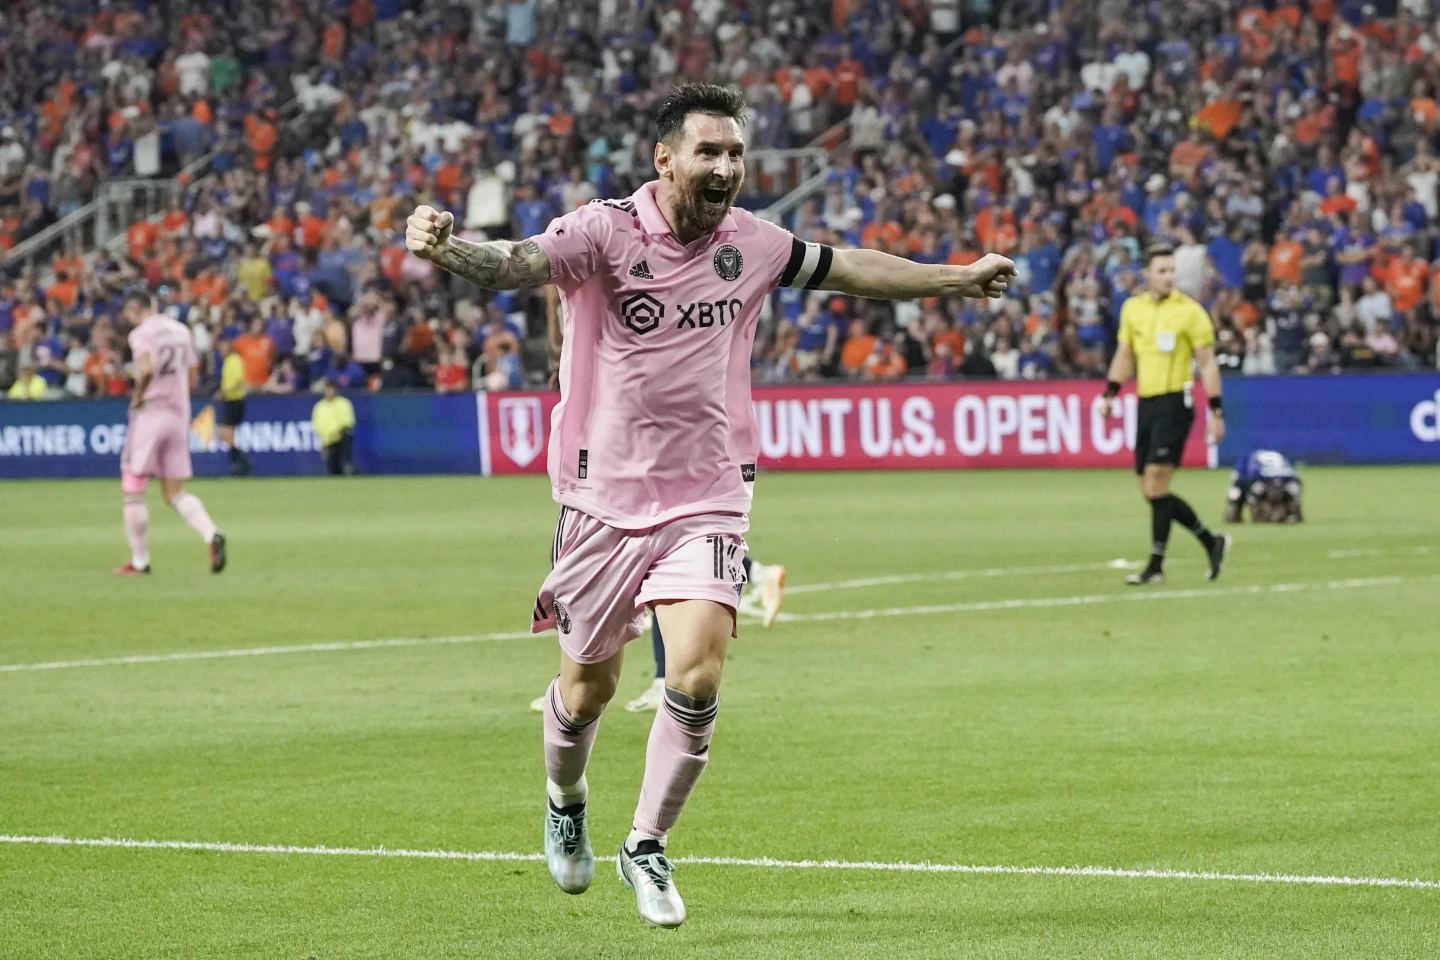 Messi converts PK, assists on 2 goals, leading Miami past MLS-best Cincinnati in US Open Cup semi